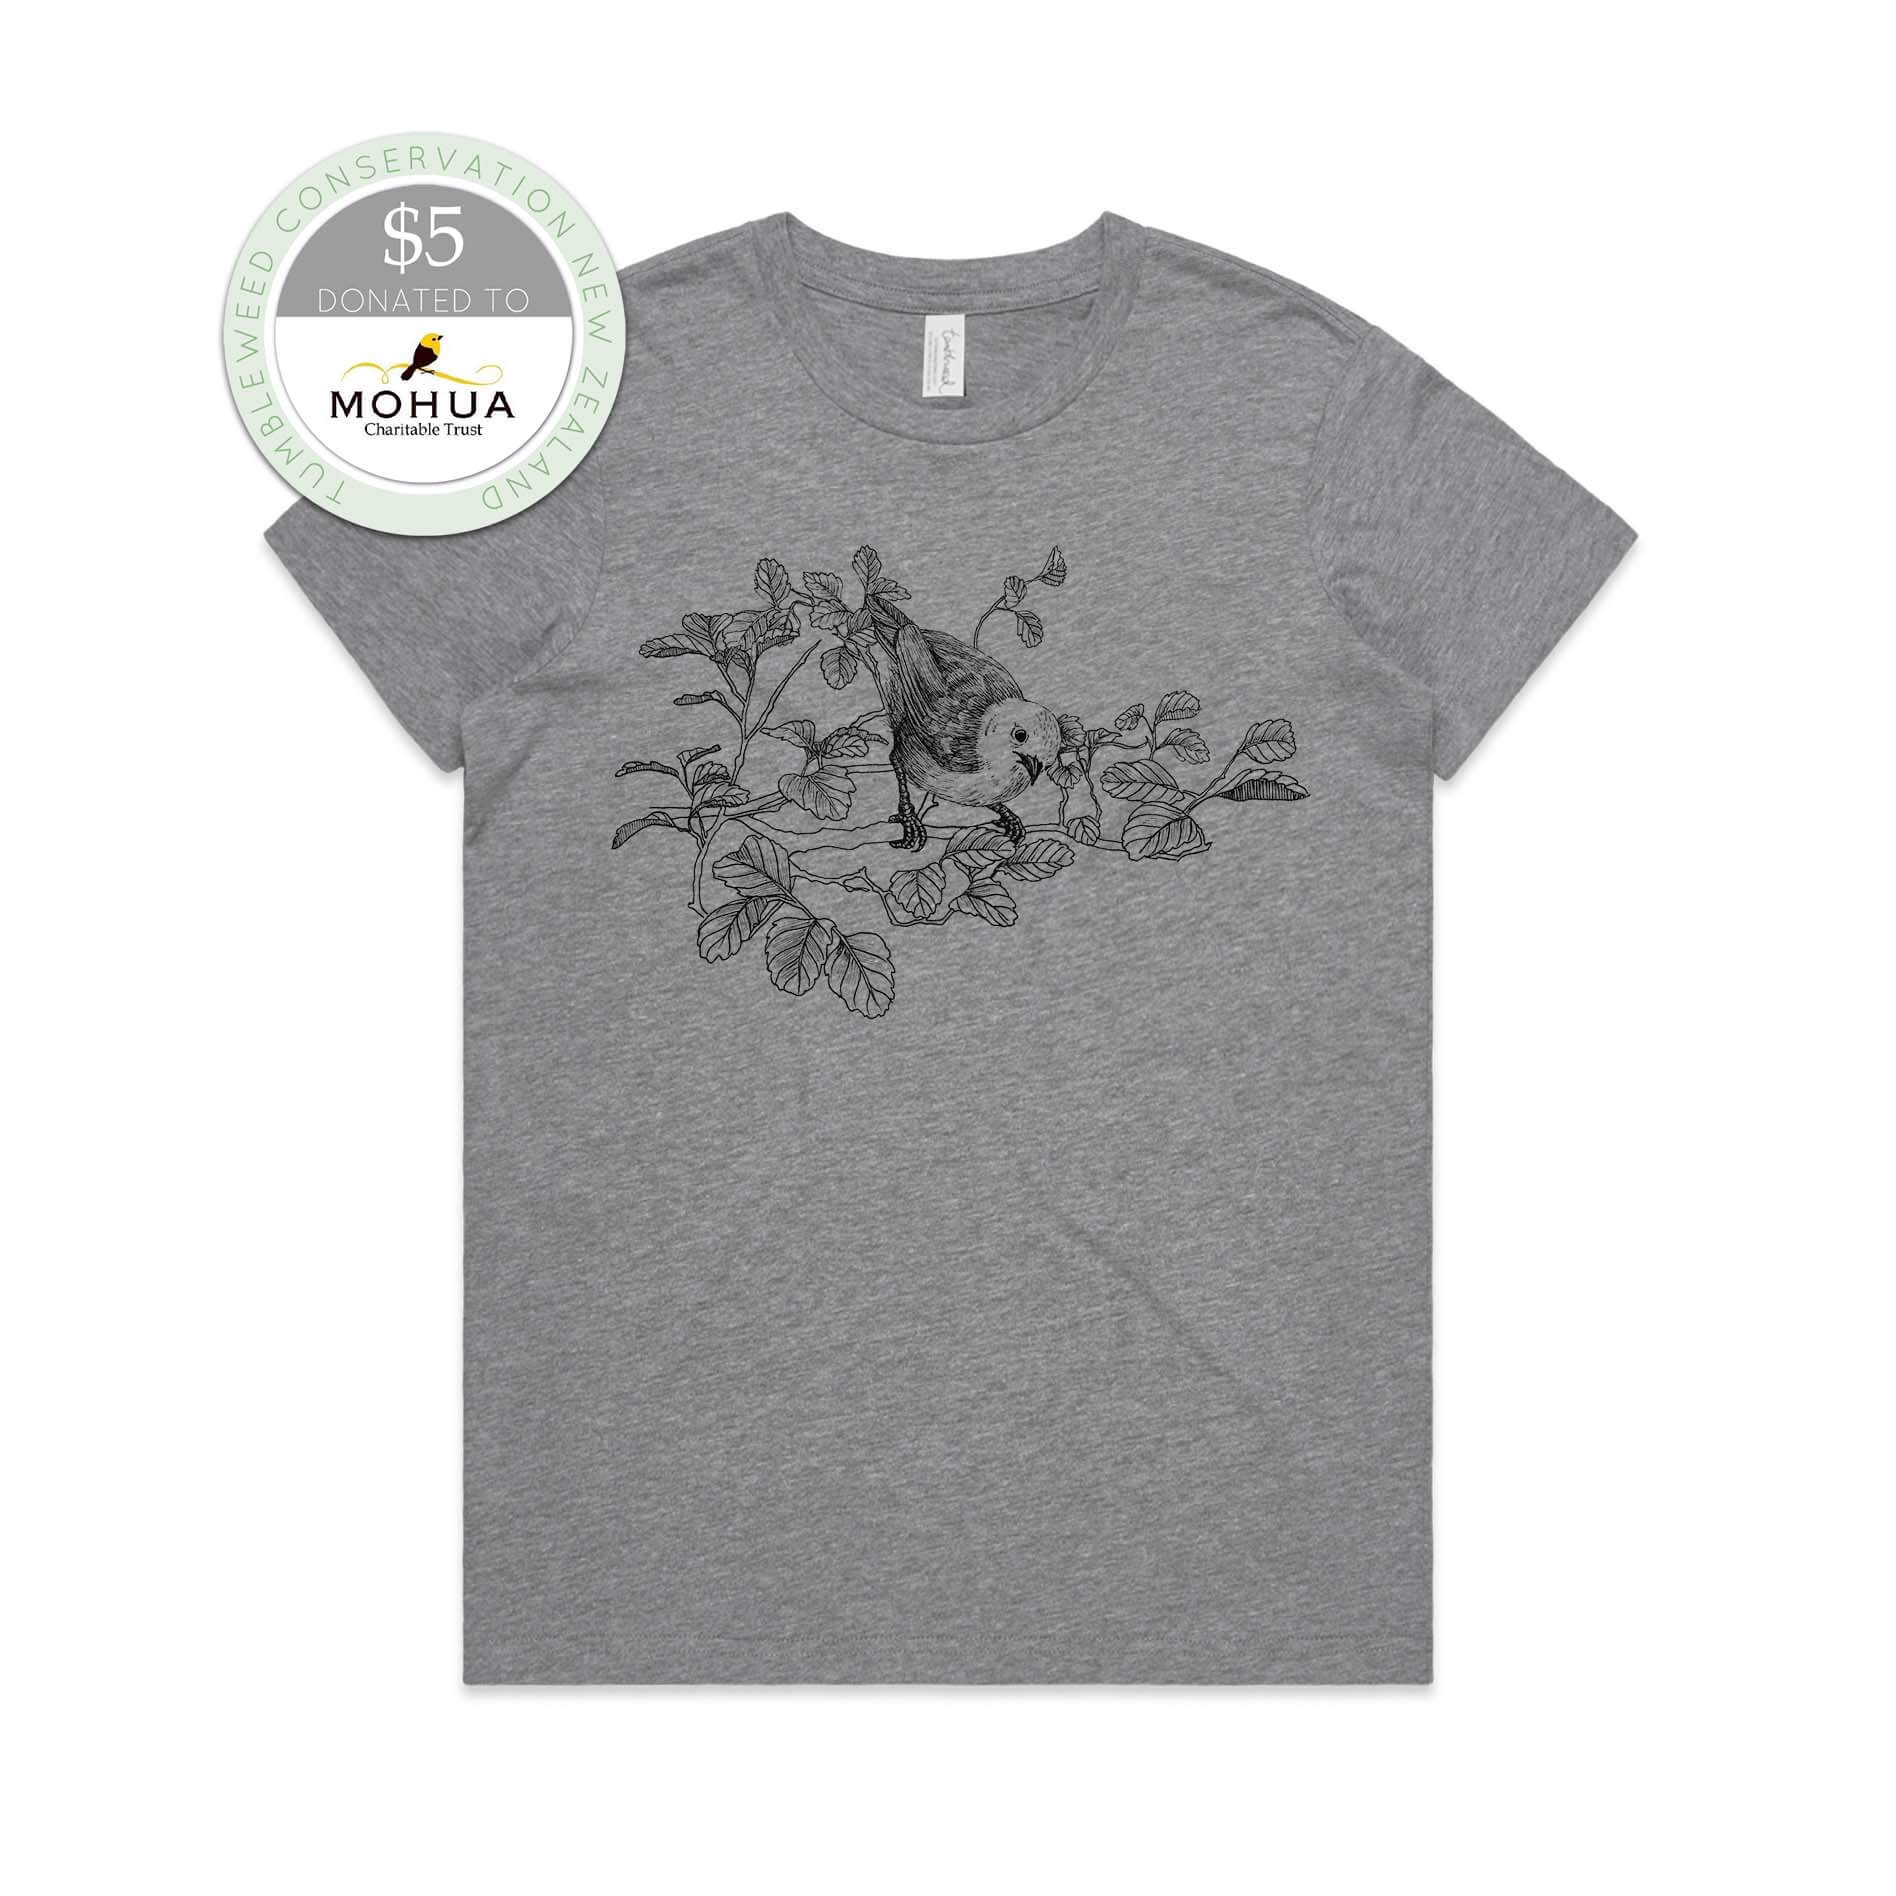 Grey marle, female t-shirt featuring a screen printed Mōhua/Yellowhead design.